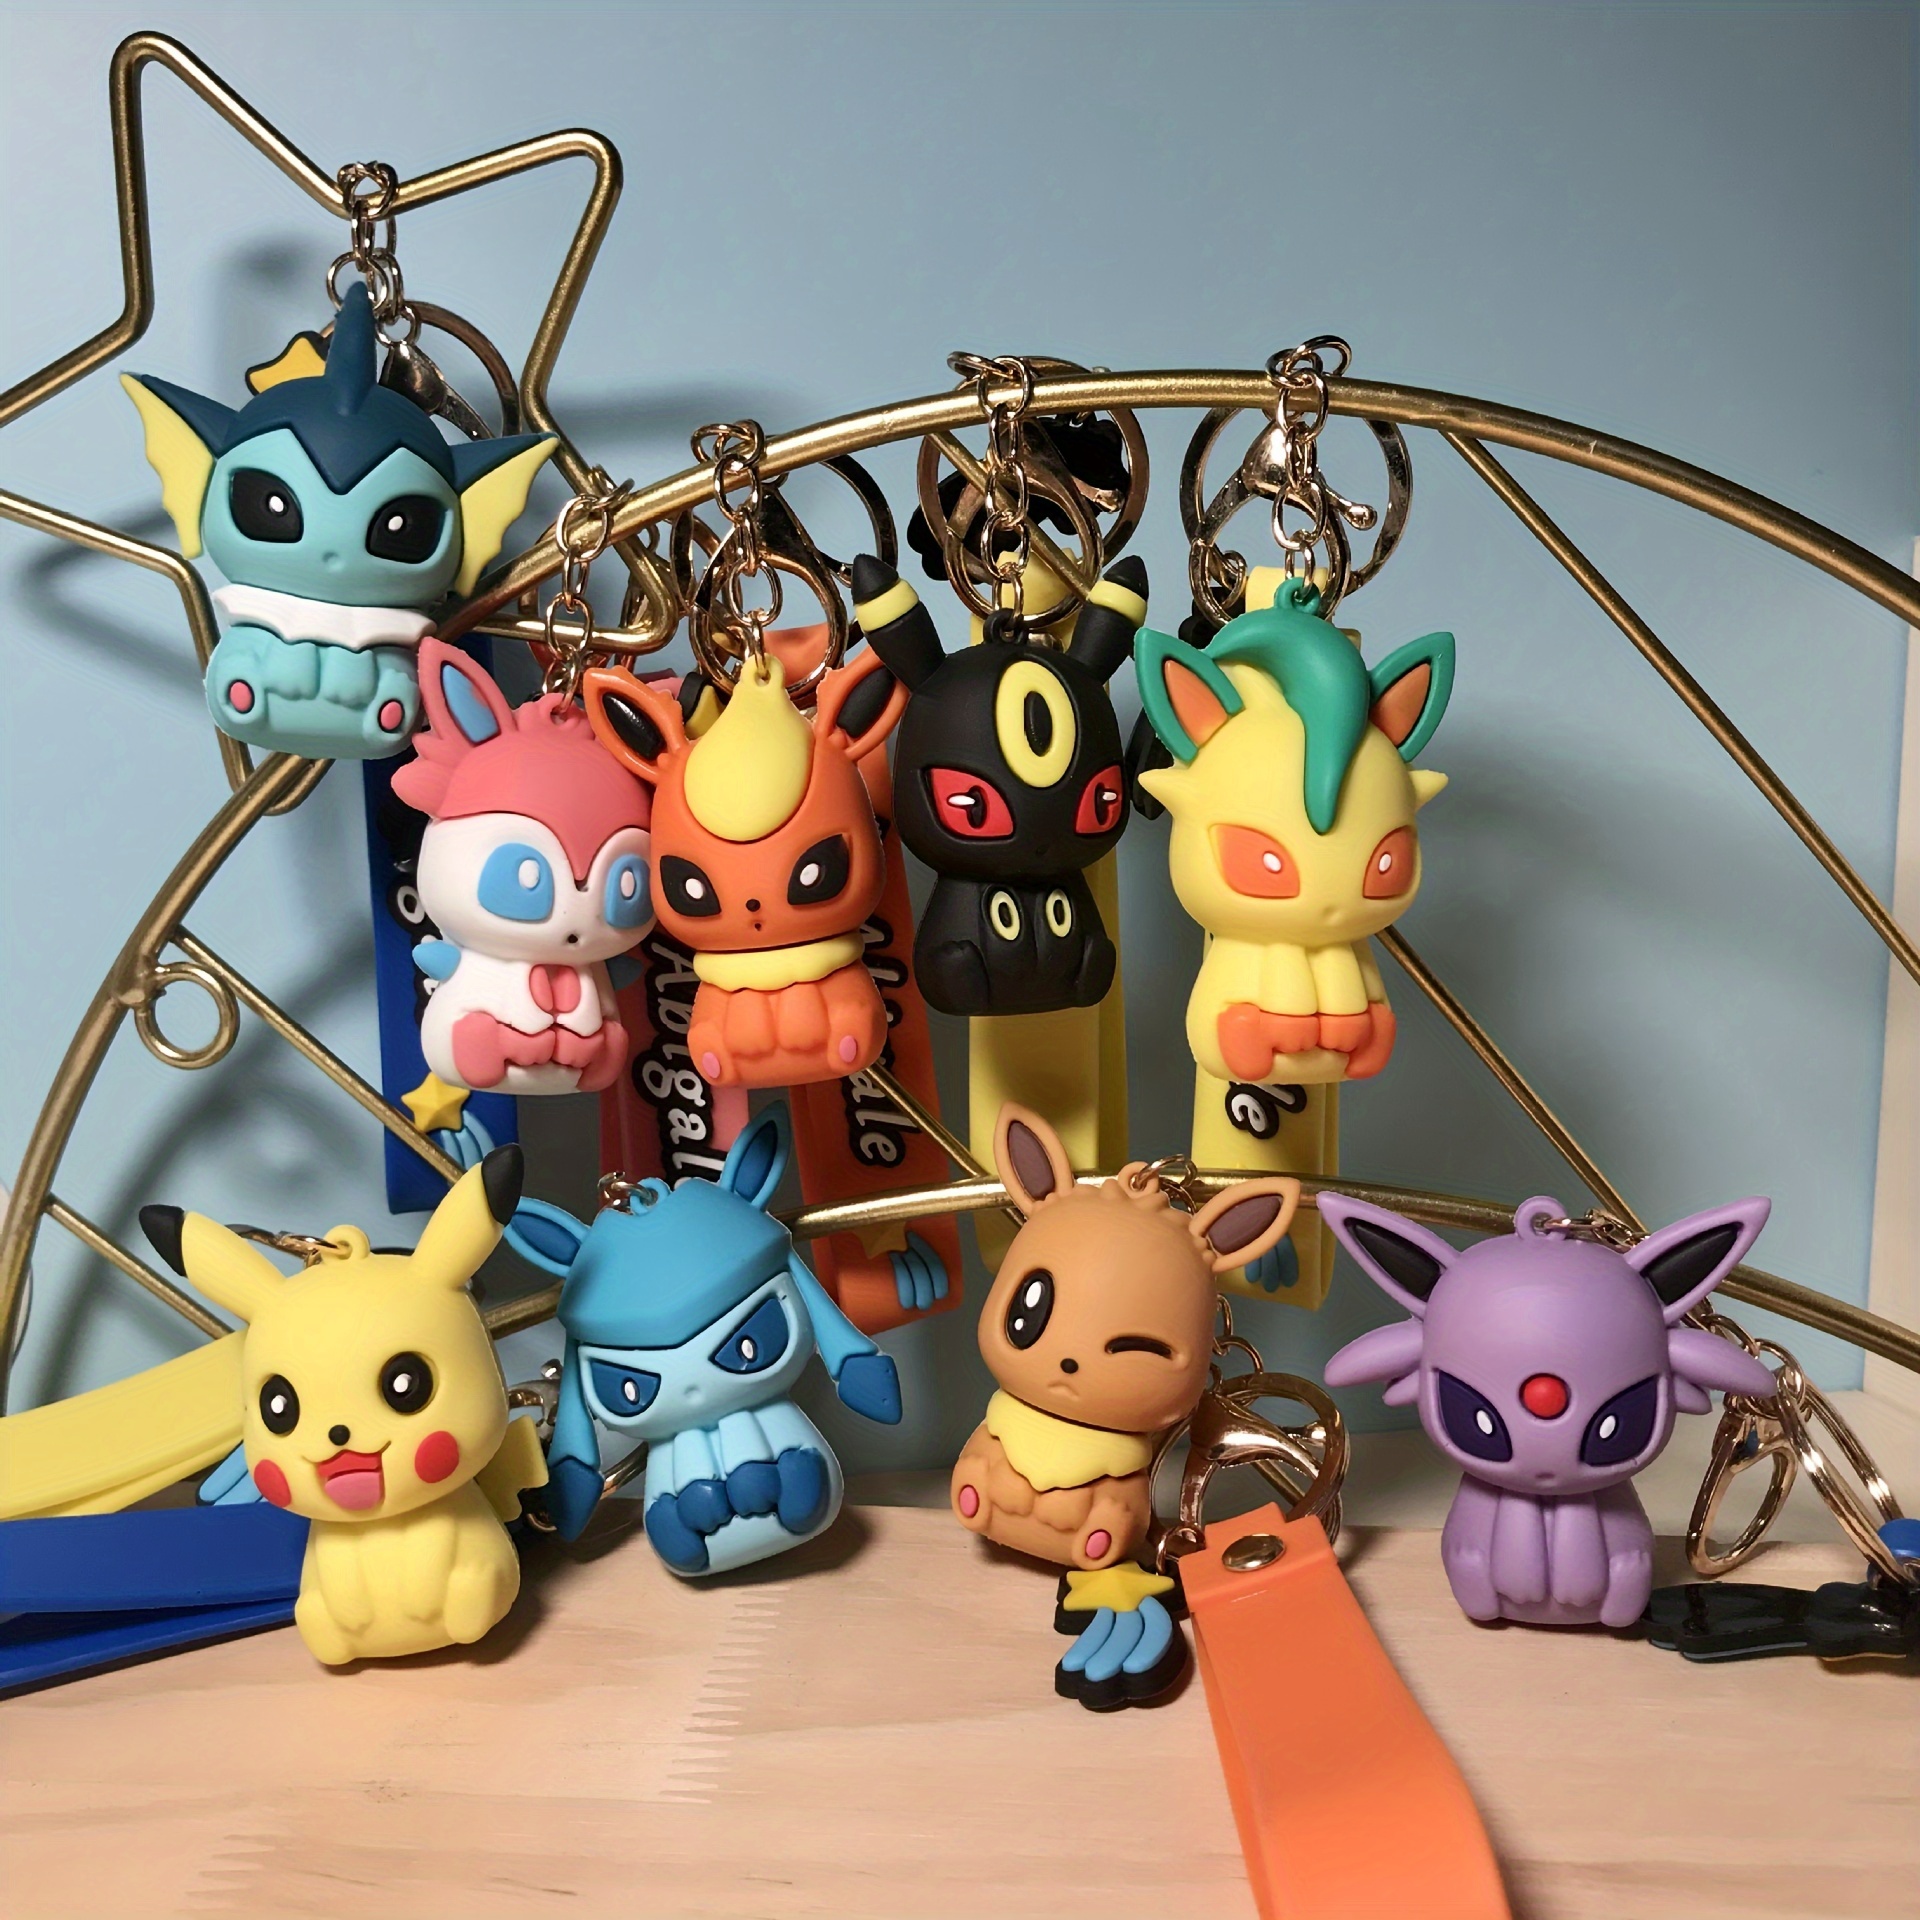 Portachiavi Pikachu - Spedizione Gratuita Per I Nuovi Utenti